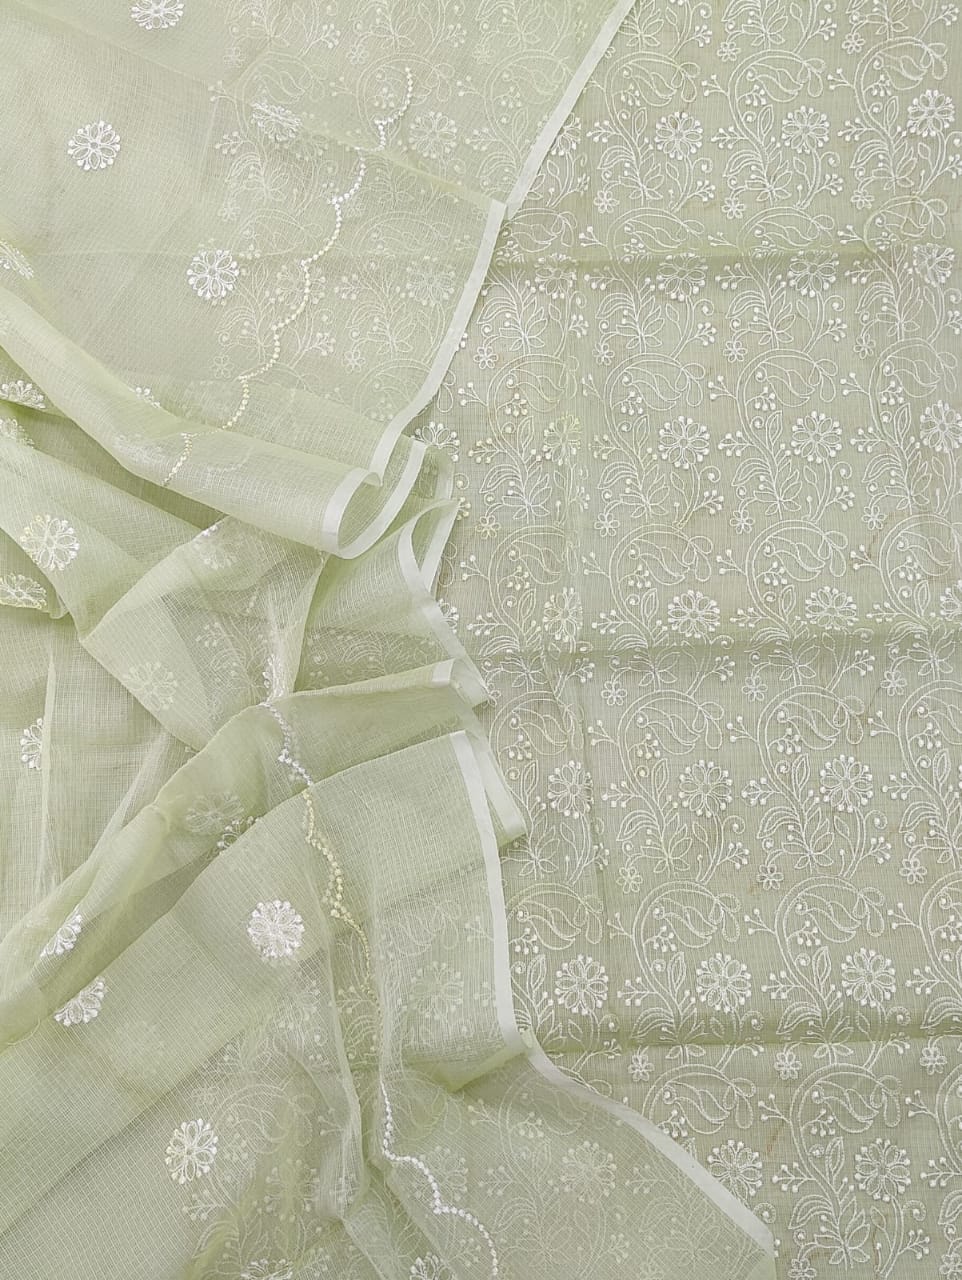 Kota Doria Embroidery Work Suits Pale Green Colour (Top+Dupatta+Bottom)